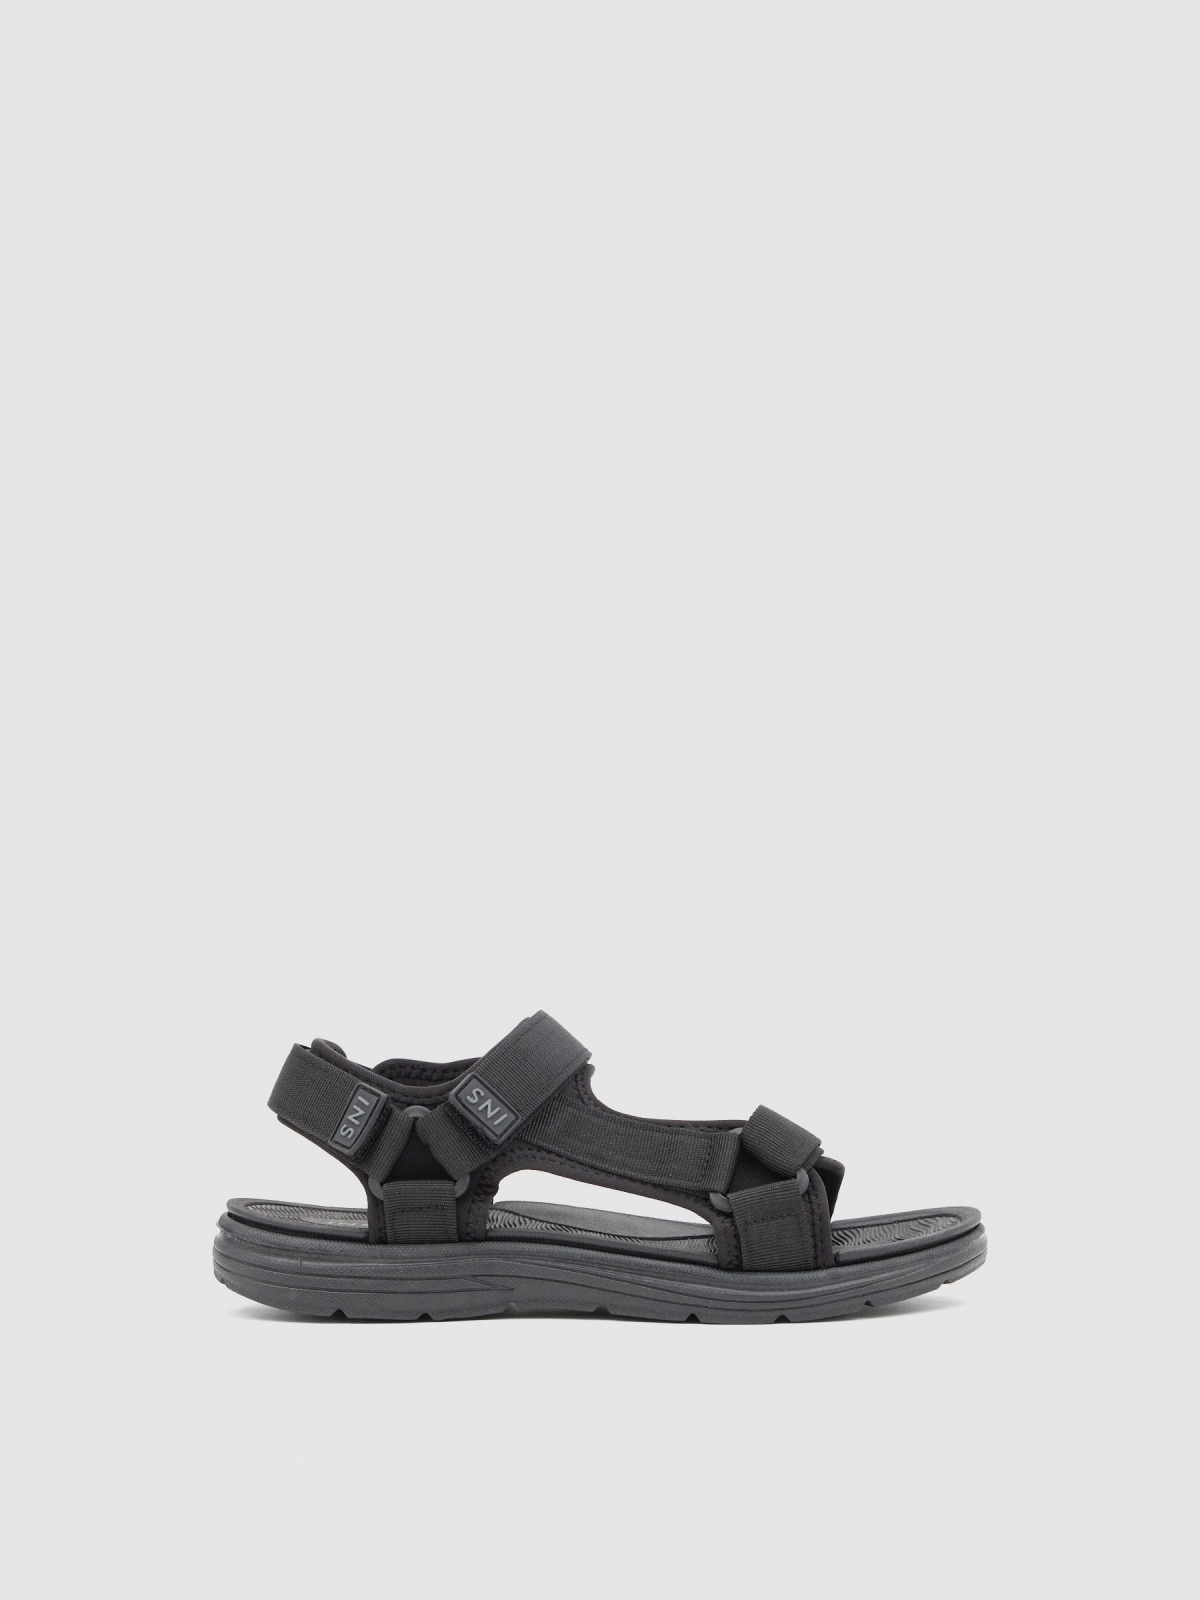 Black nylon sports sandal